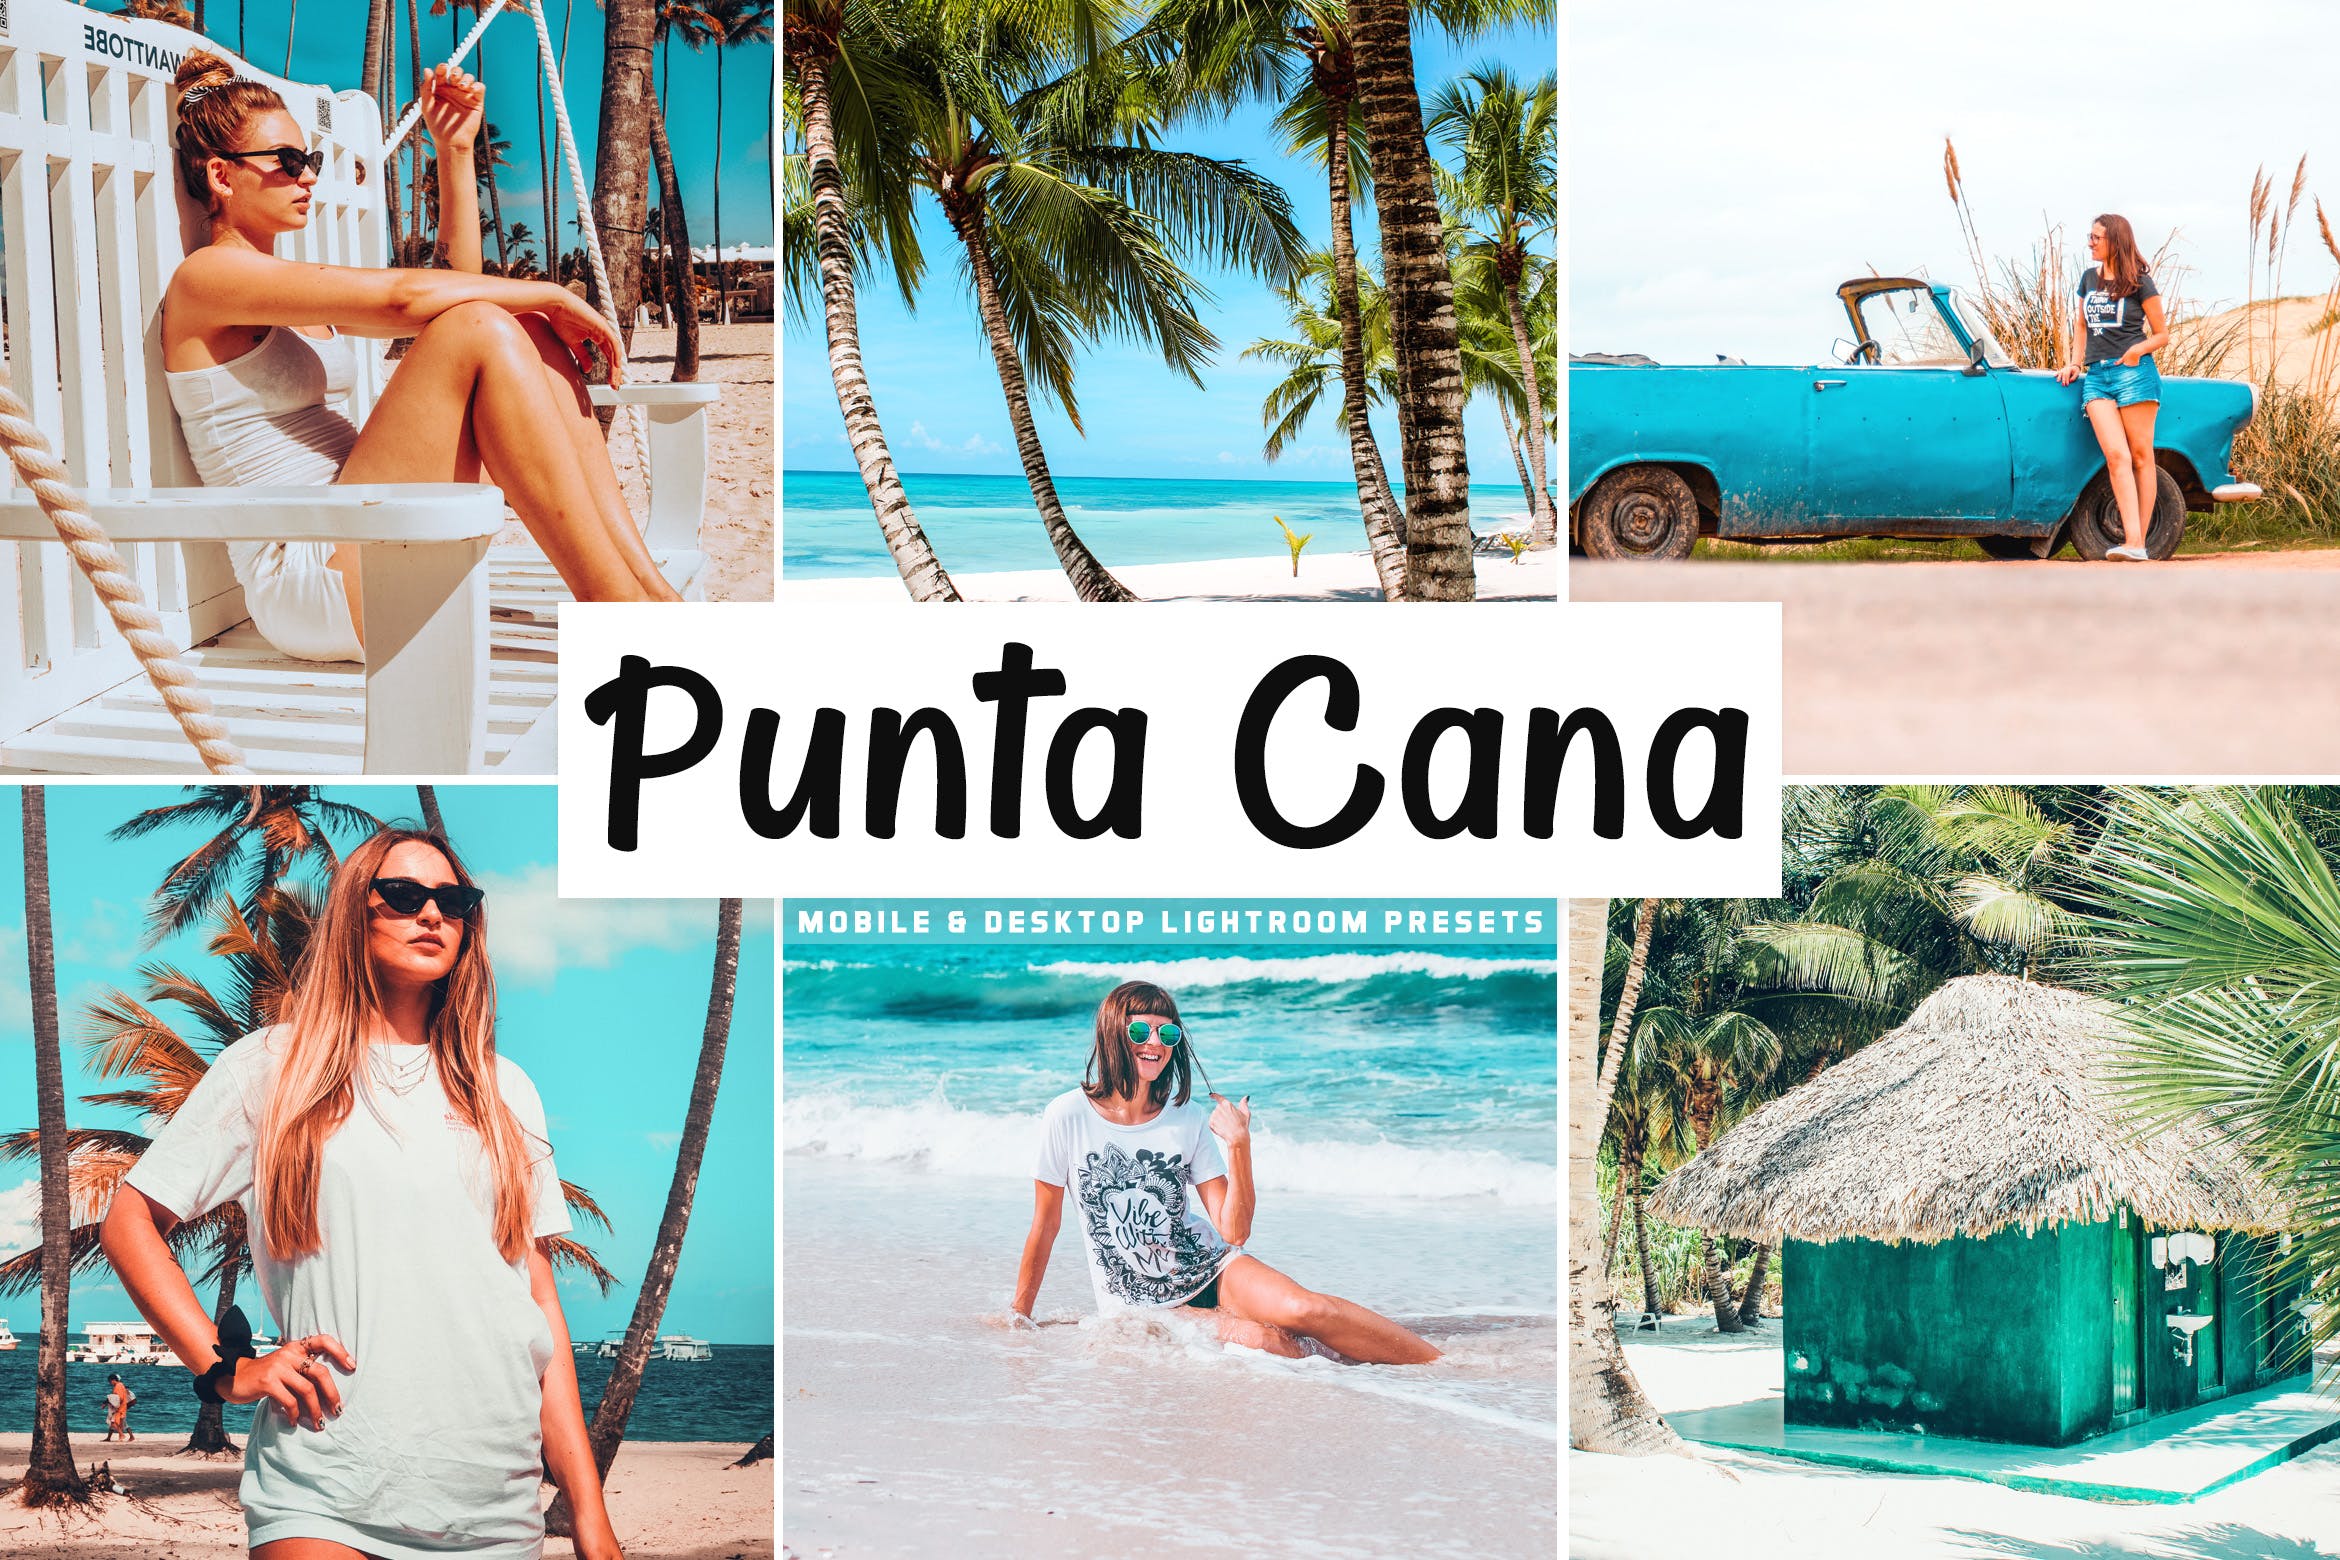 蓝色&绿松石色自然暖色调Lightroom预设 Punta Cana Mobile & Desktop Lightroom Presets插图